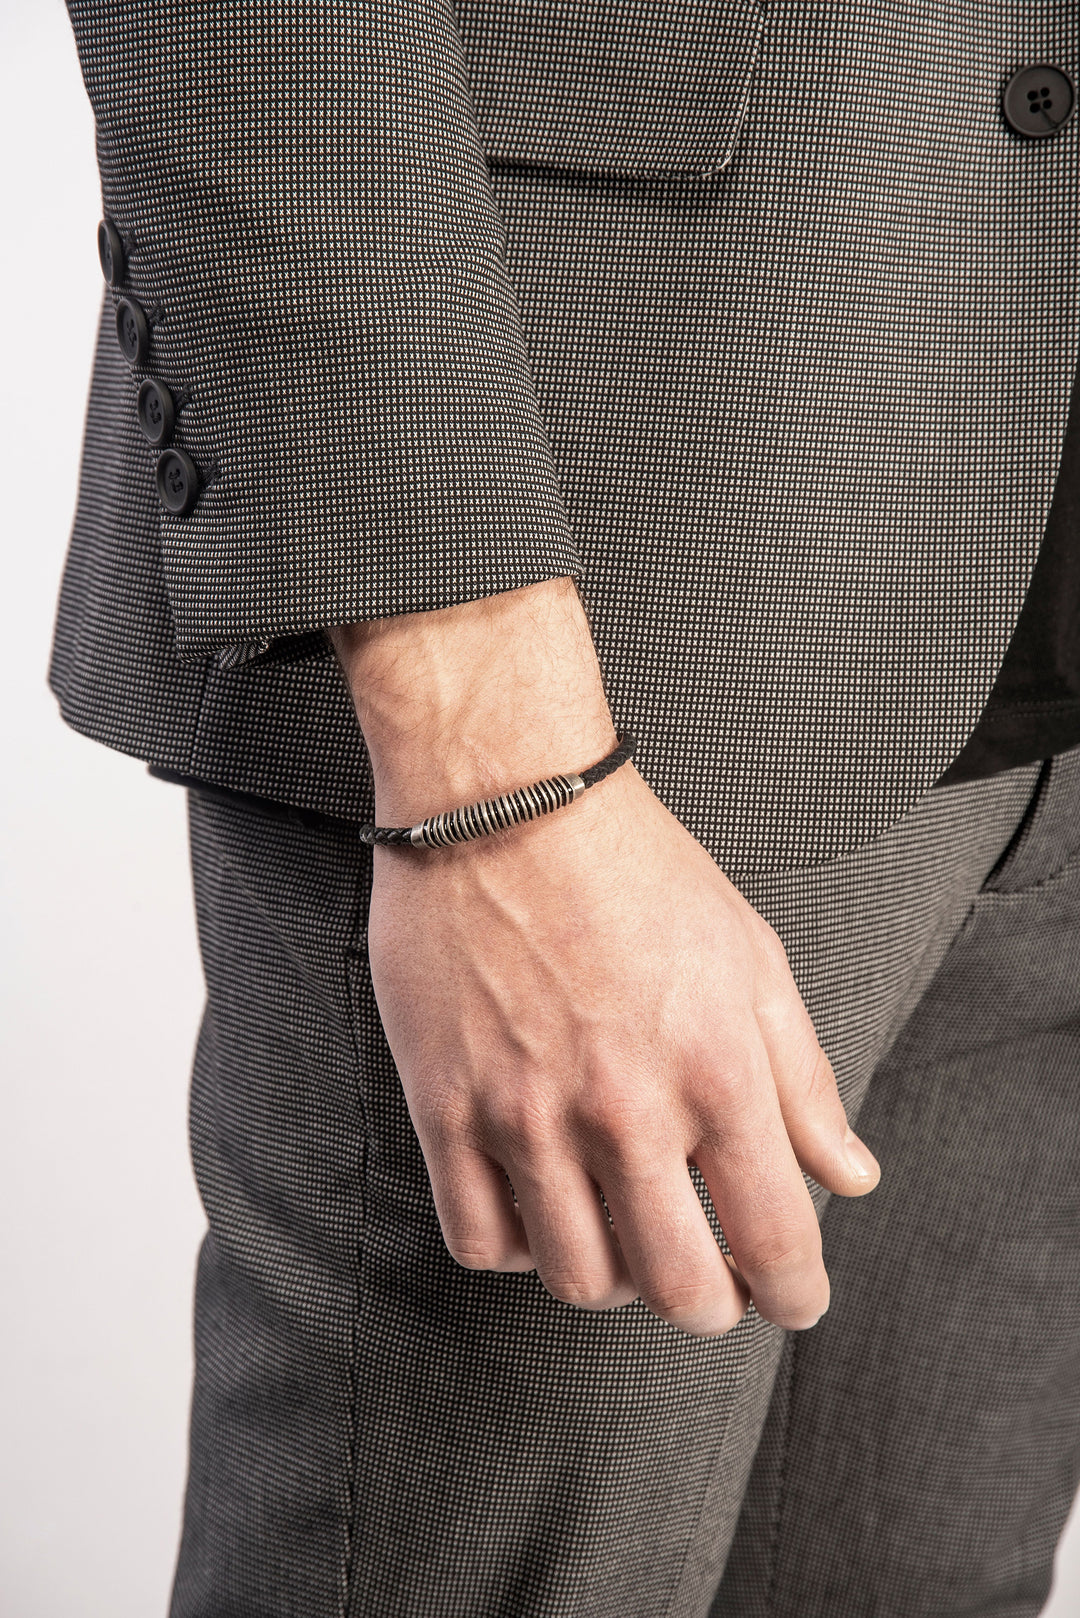 ACIES Oxidized Silver and Black Leather Bracelet with Black Enamel